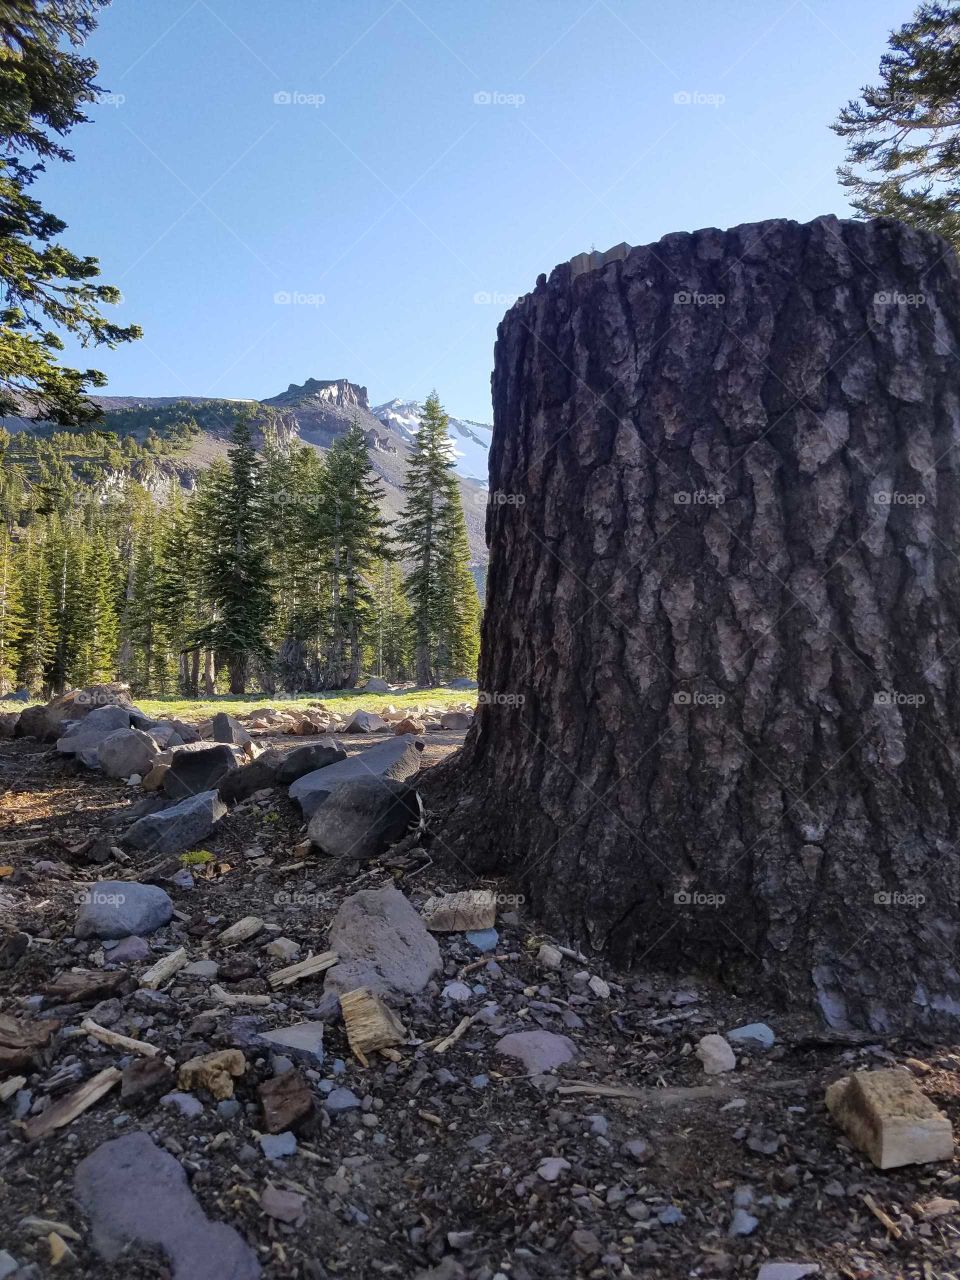 Mt. Shasta Tree stump